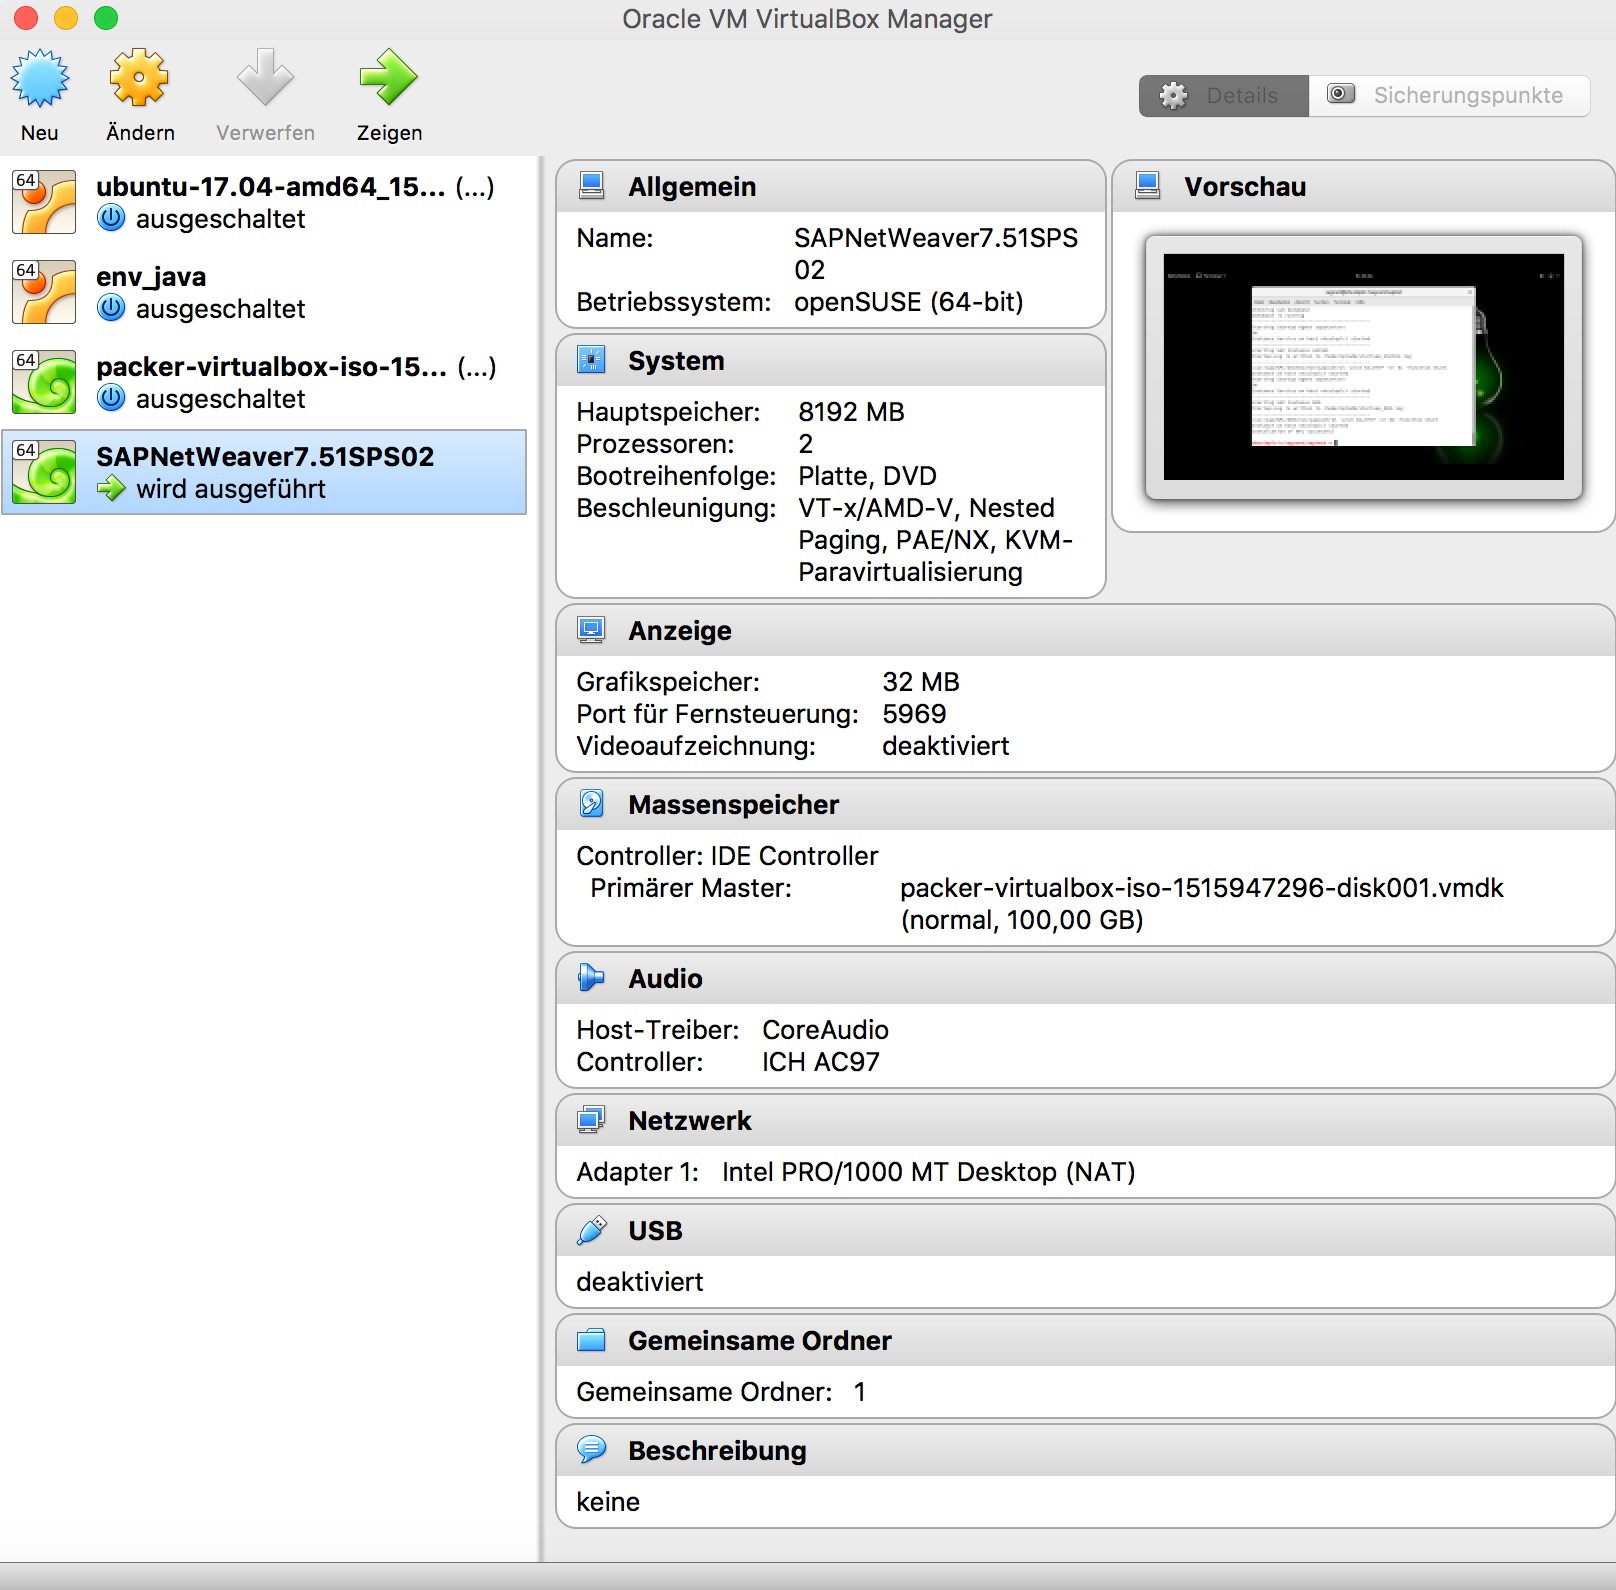 Vagrant Box to install SAP NetWeaver AS ABAP 751 SP02 Developer Edition